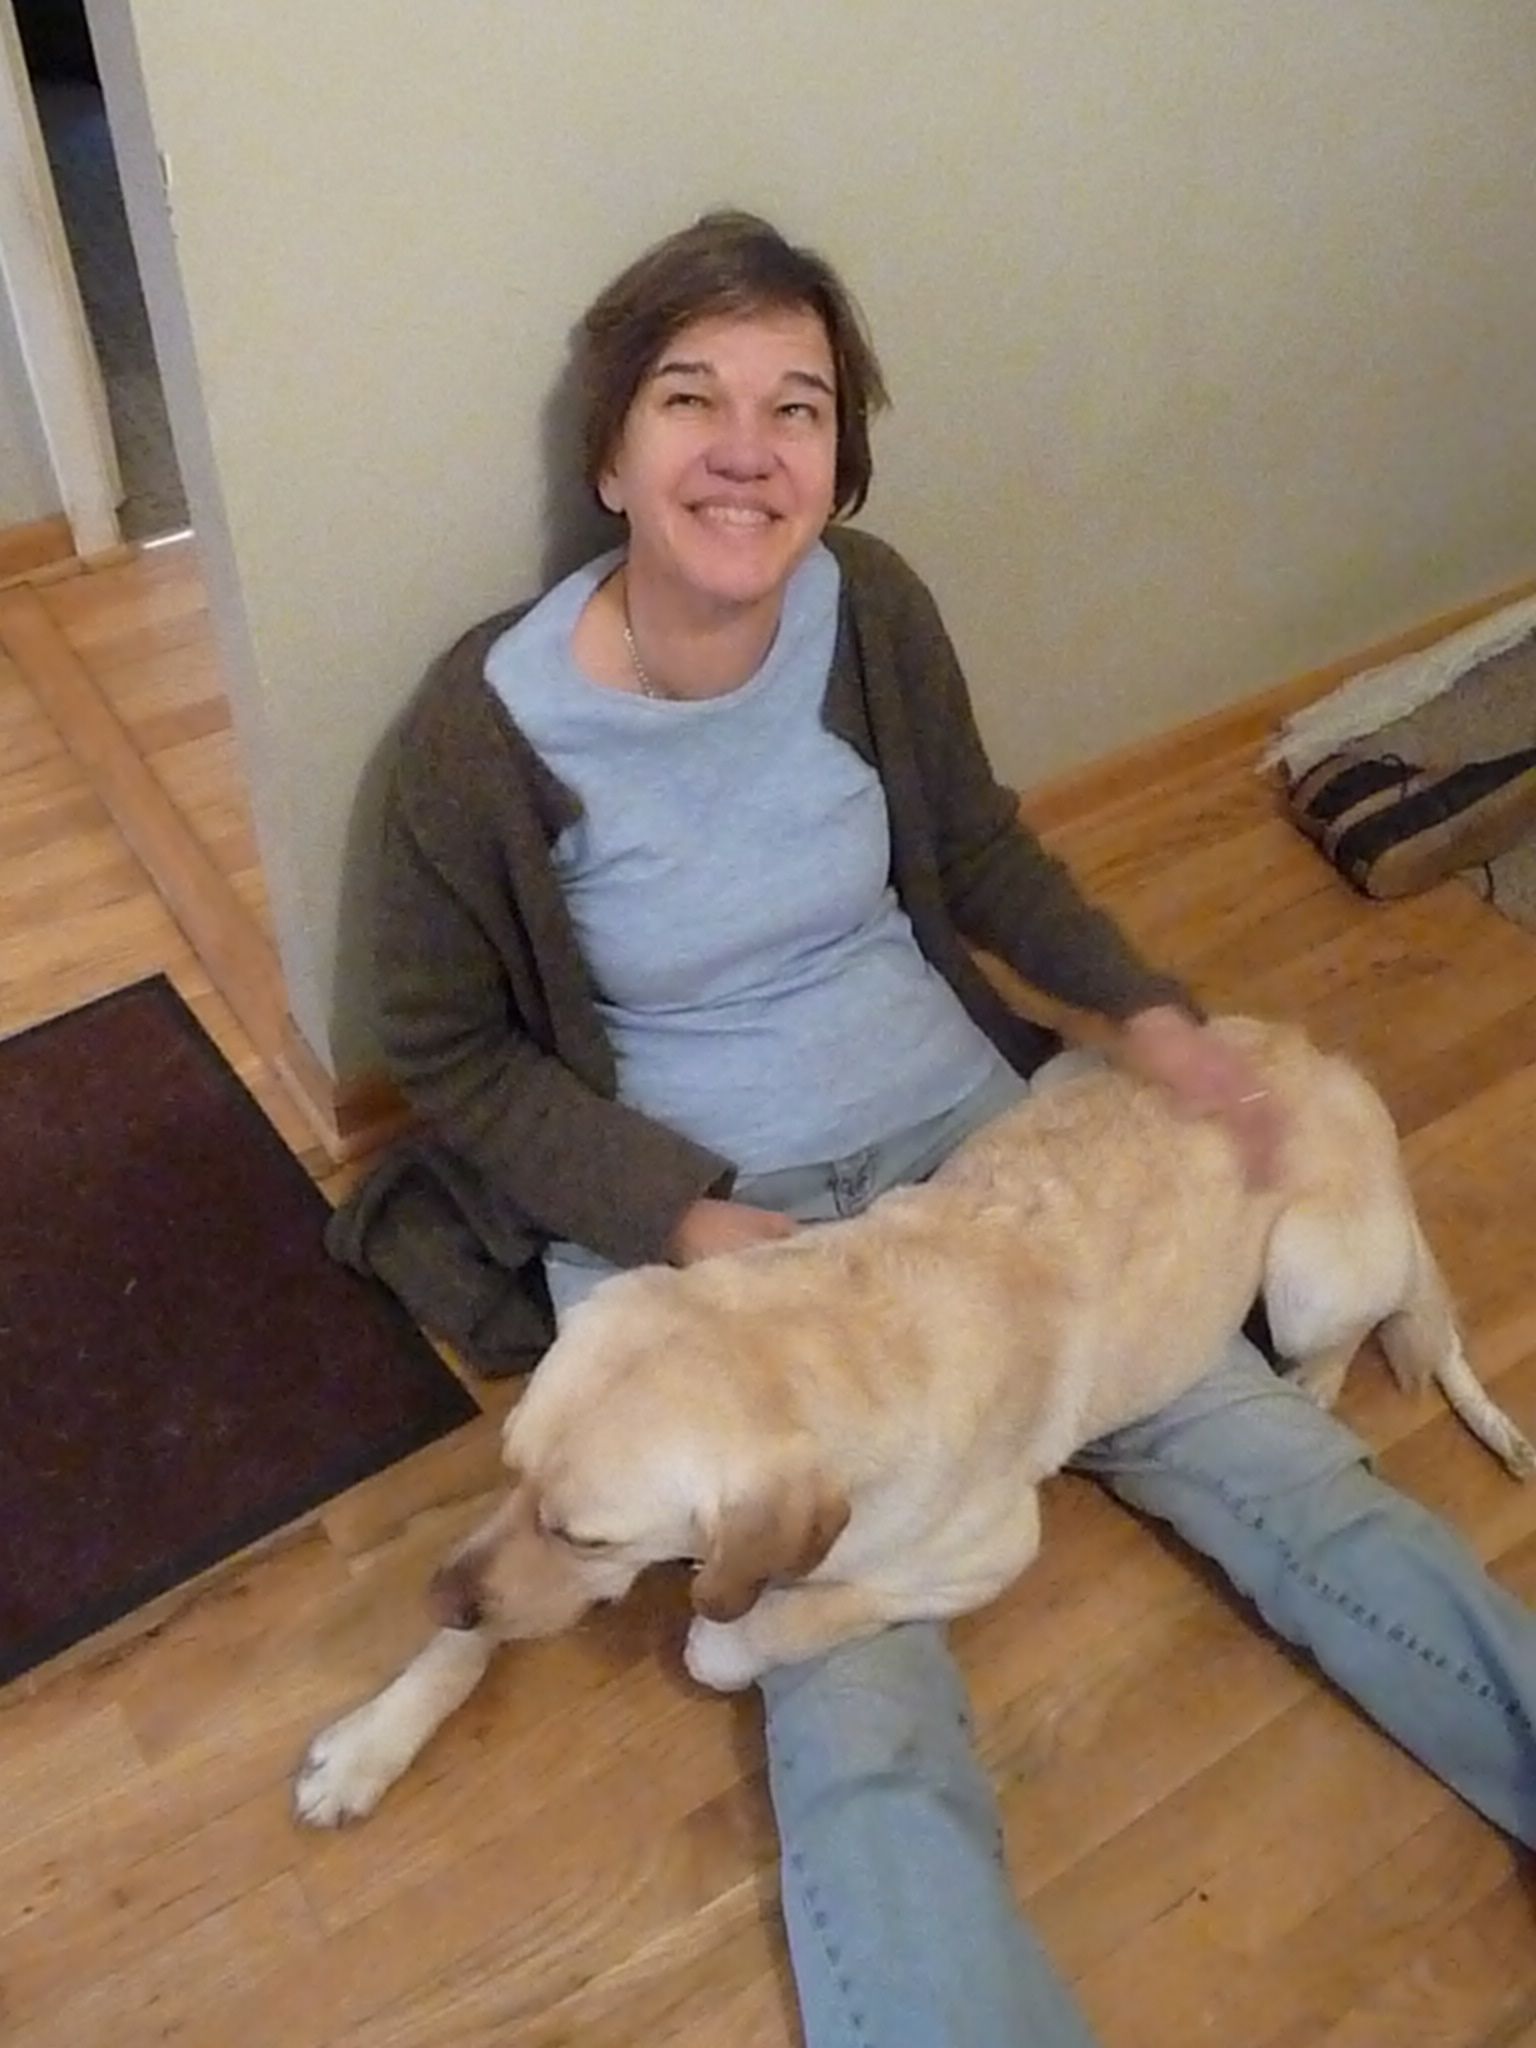 Photo of Beth's third Seeing Eye dog Harper lying across Beth's lap on the floor.